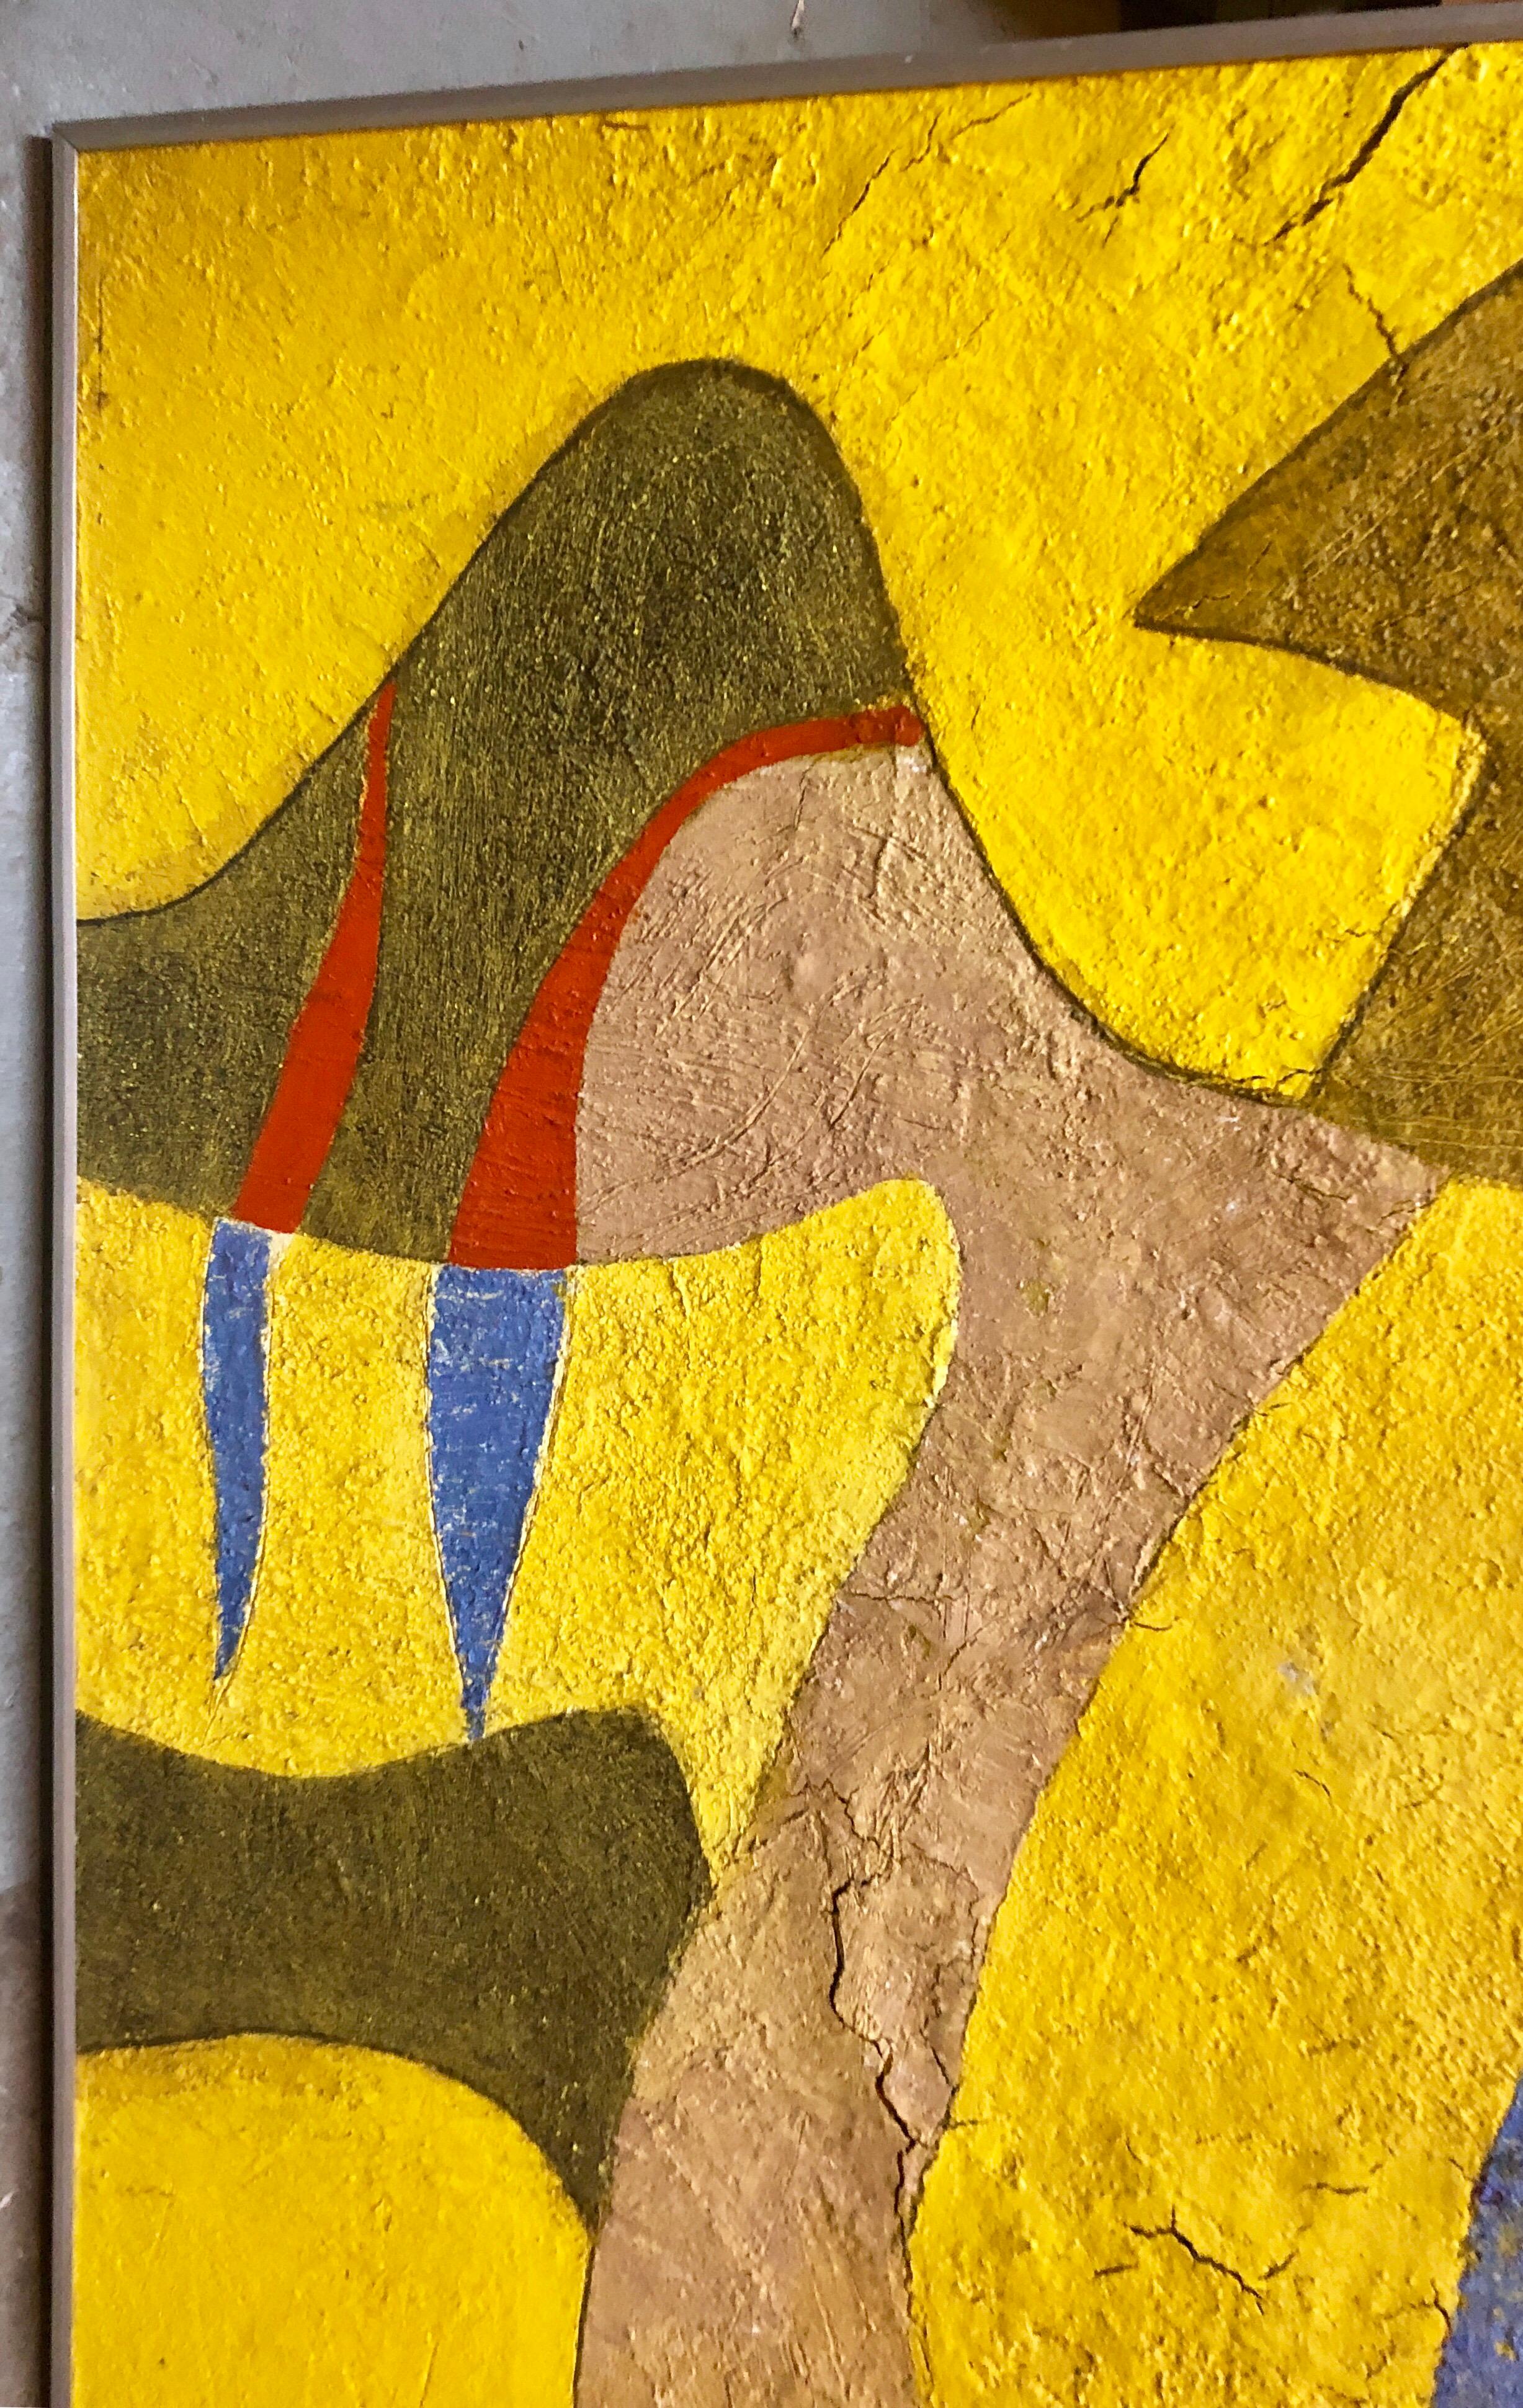 PAJARO AMARILLO, The Yellow Bird. Latin American Mixed Media Painting 2